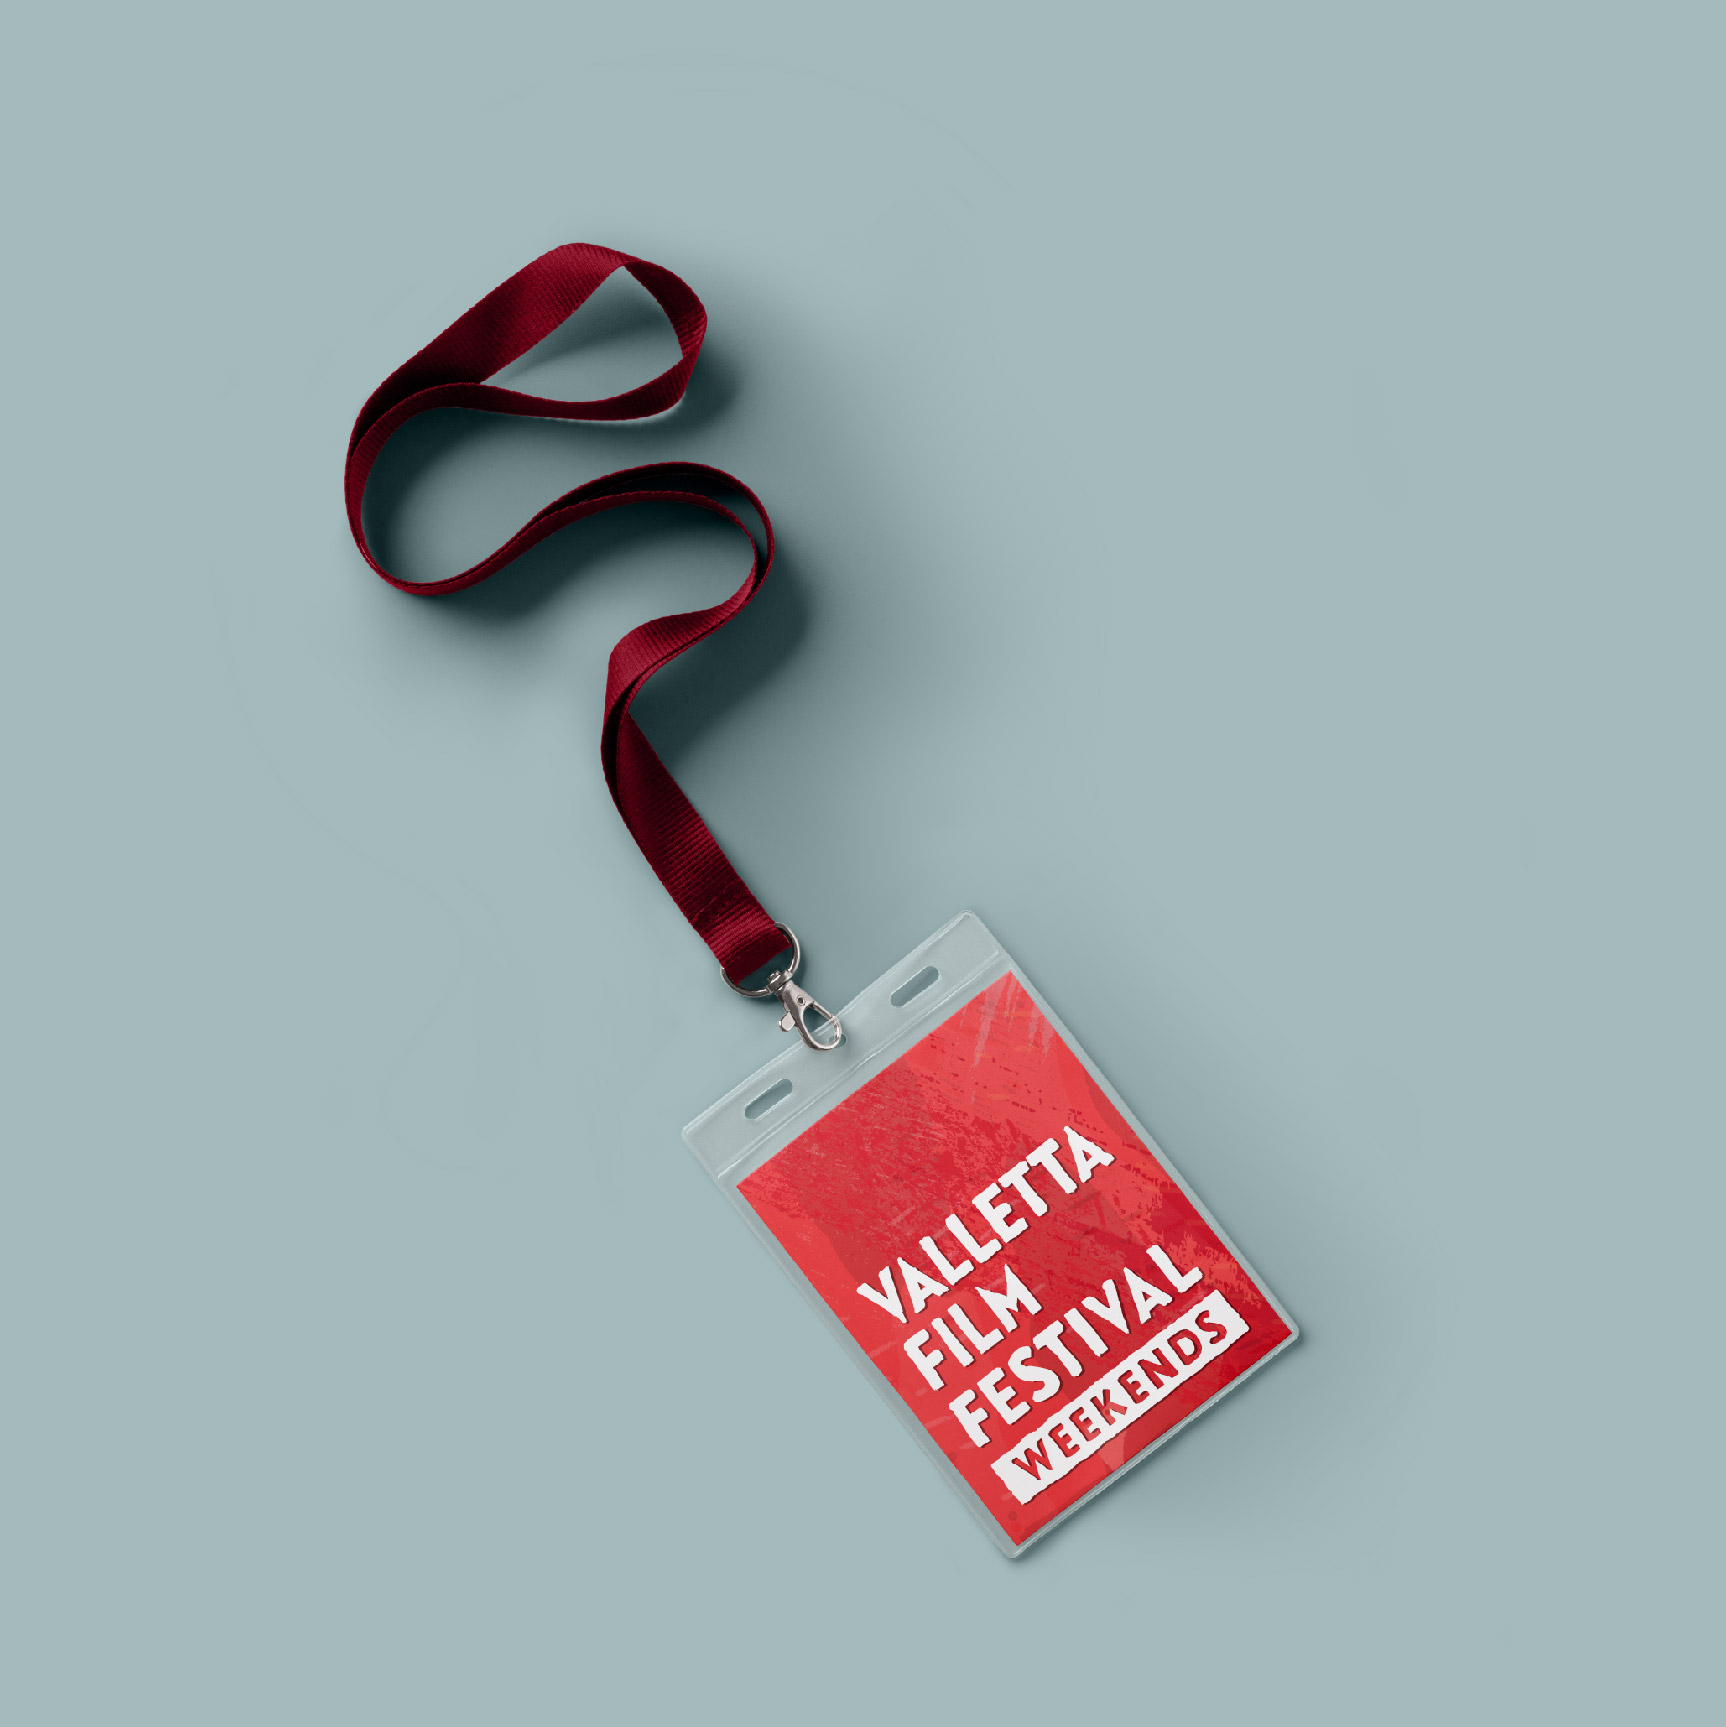 valletta film festival malta general condition design studio belgrade